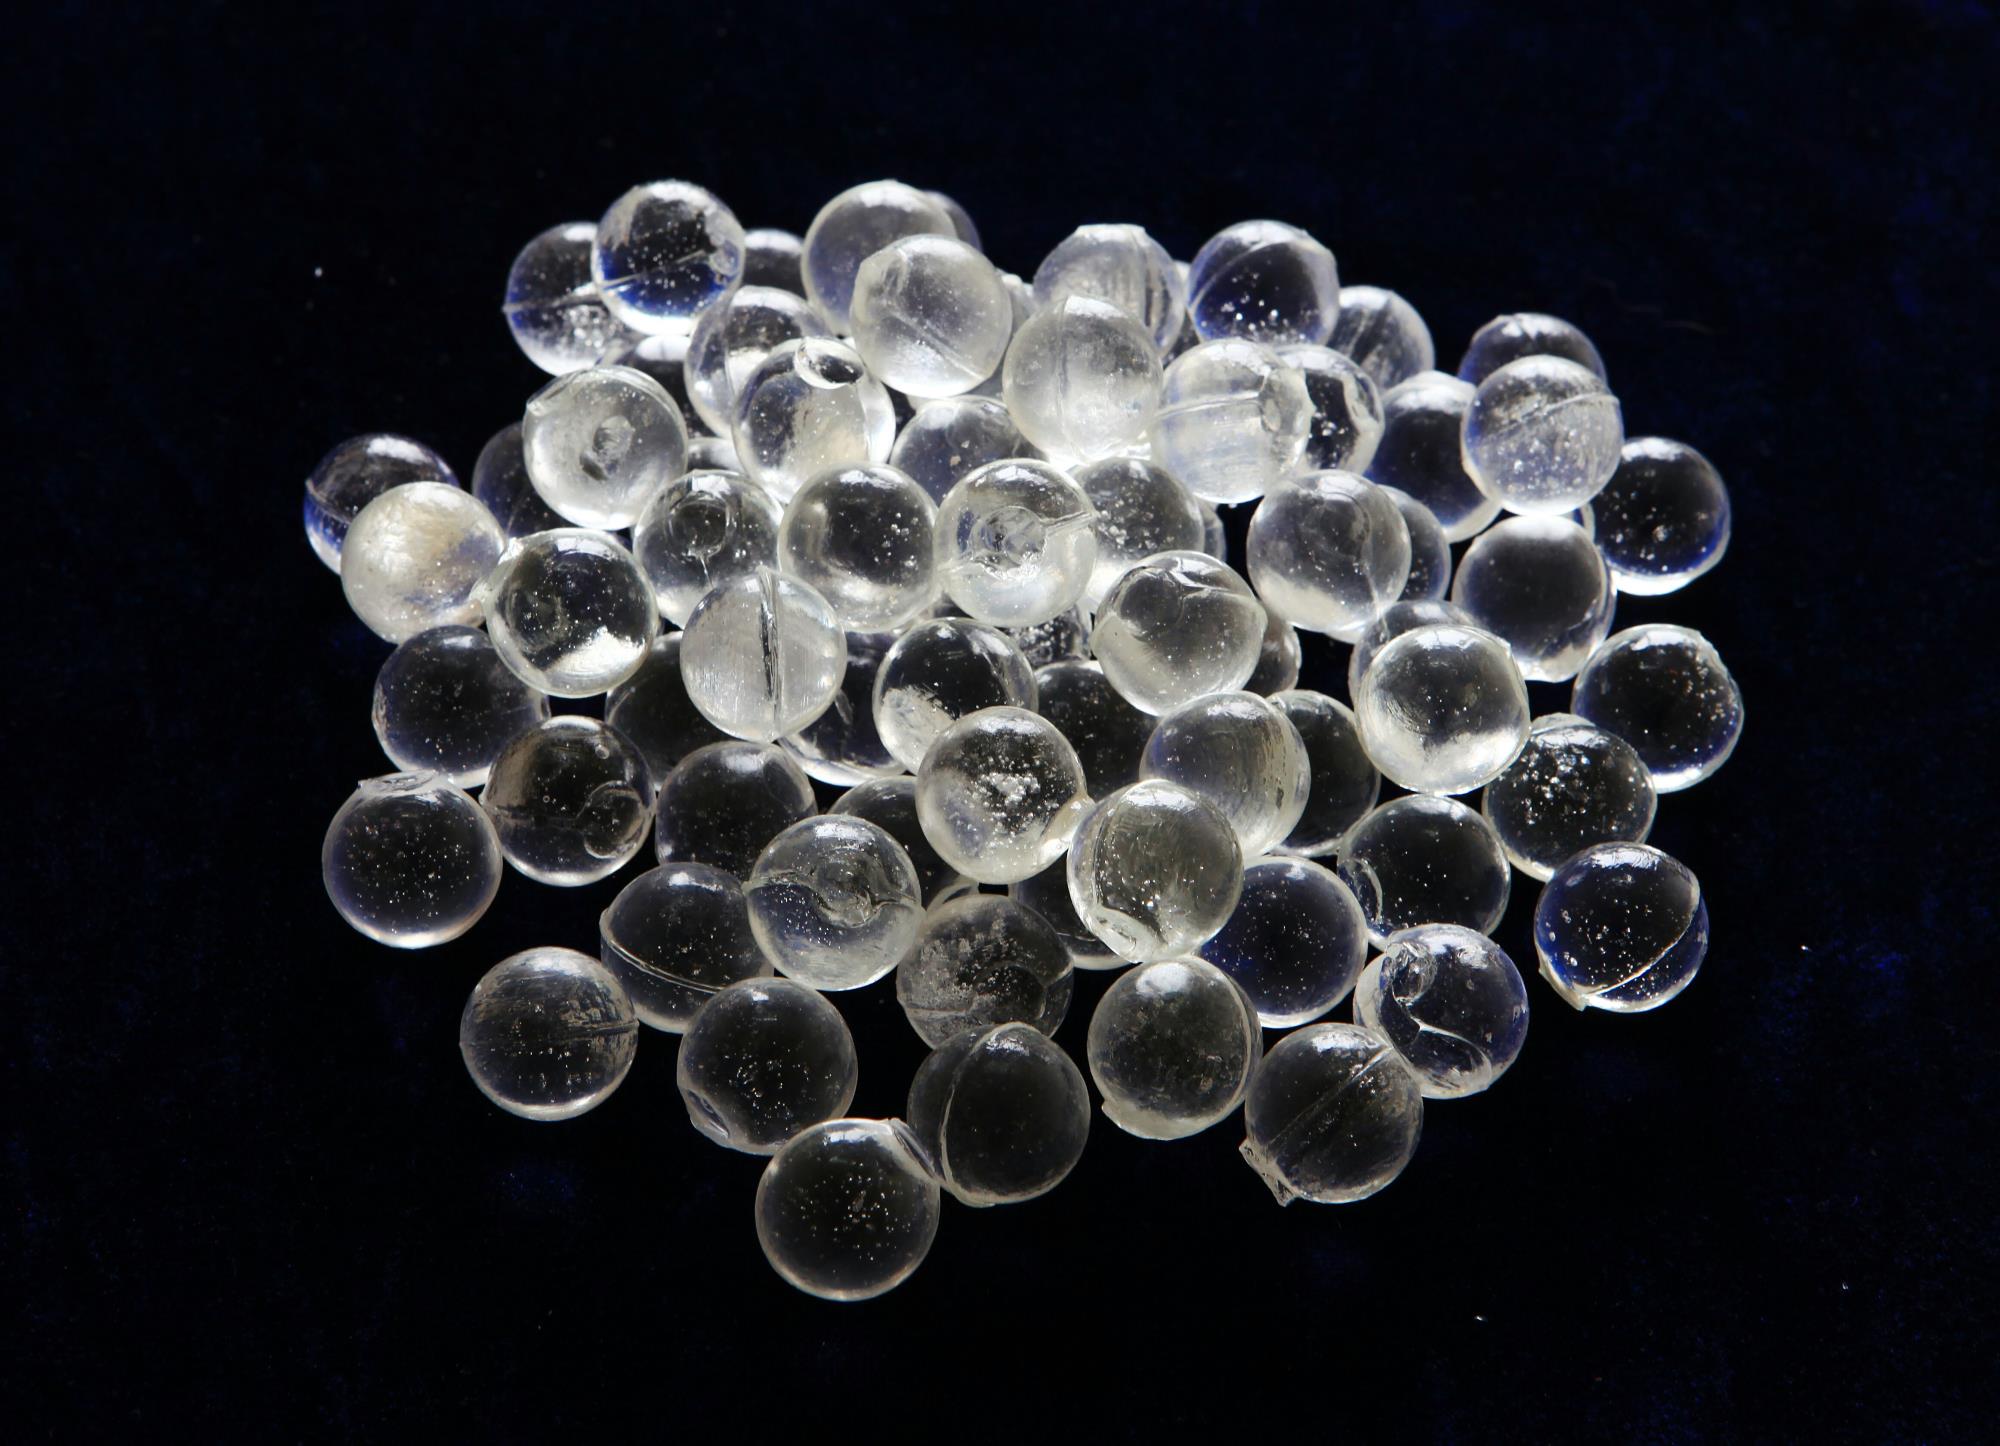 Antiscalant Ball (Sodium calcium polyphosphate)